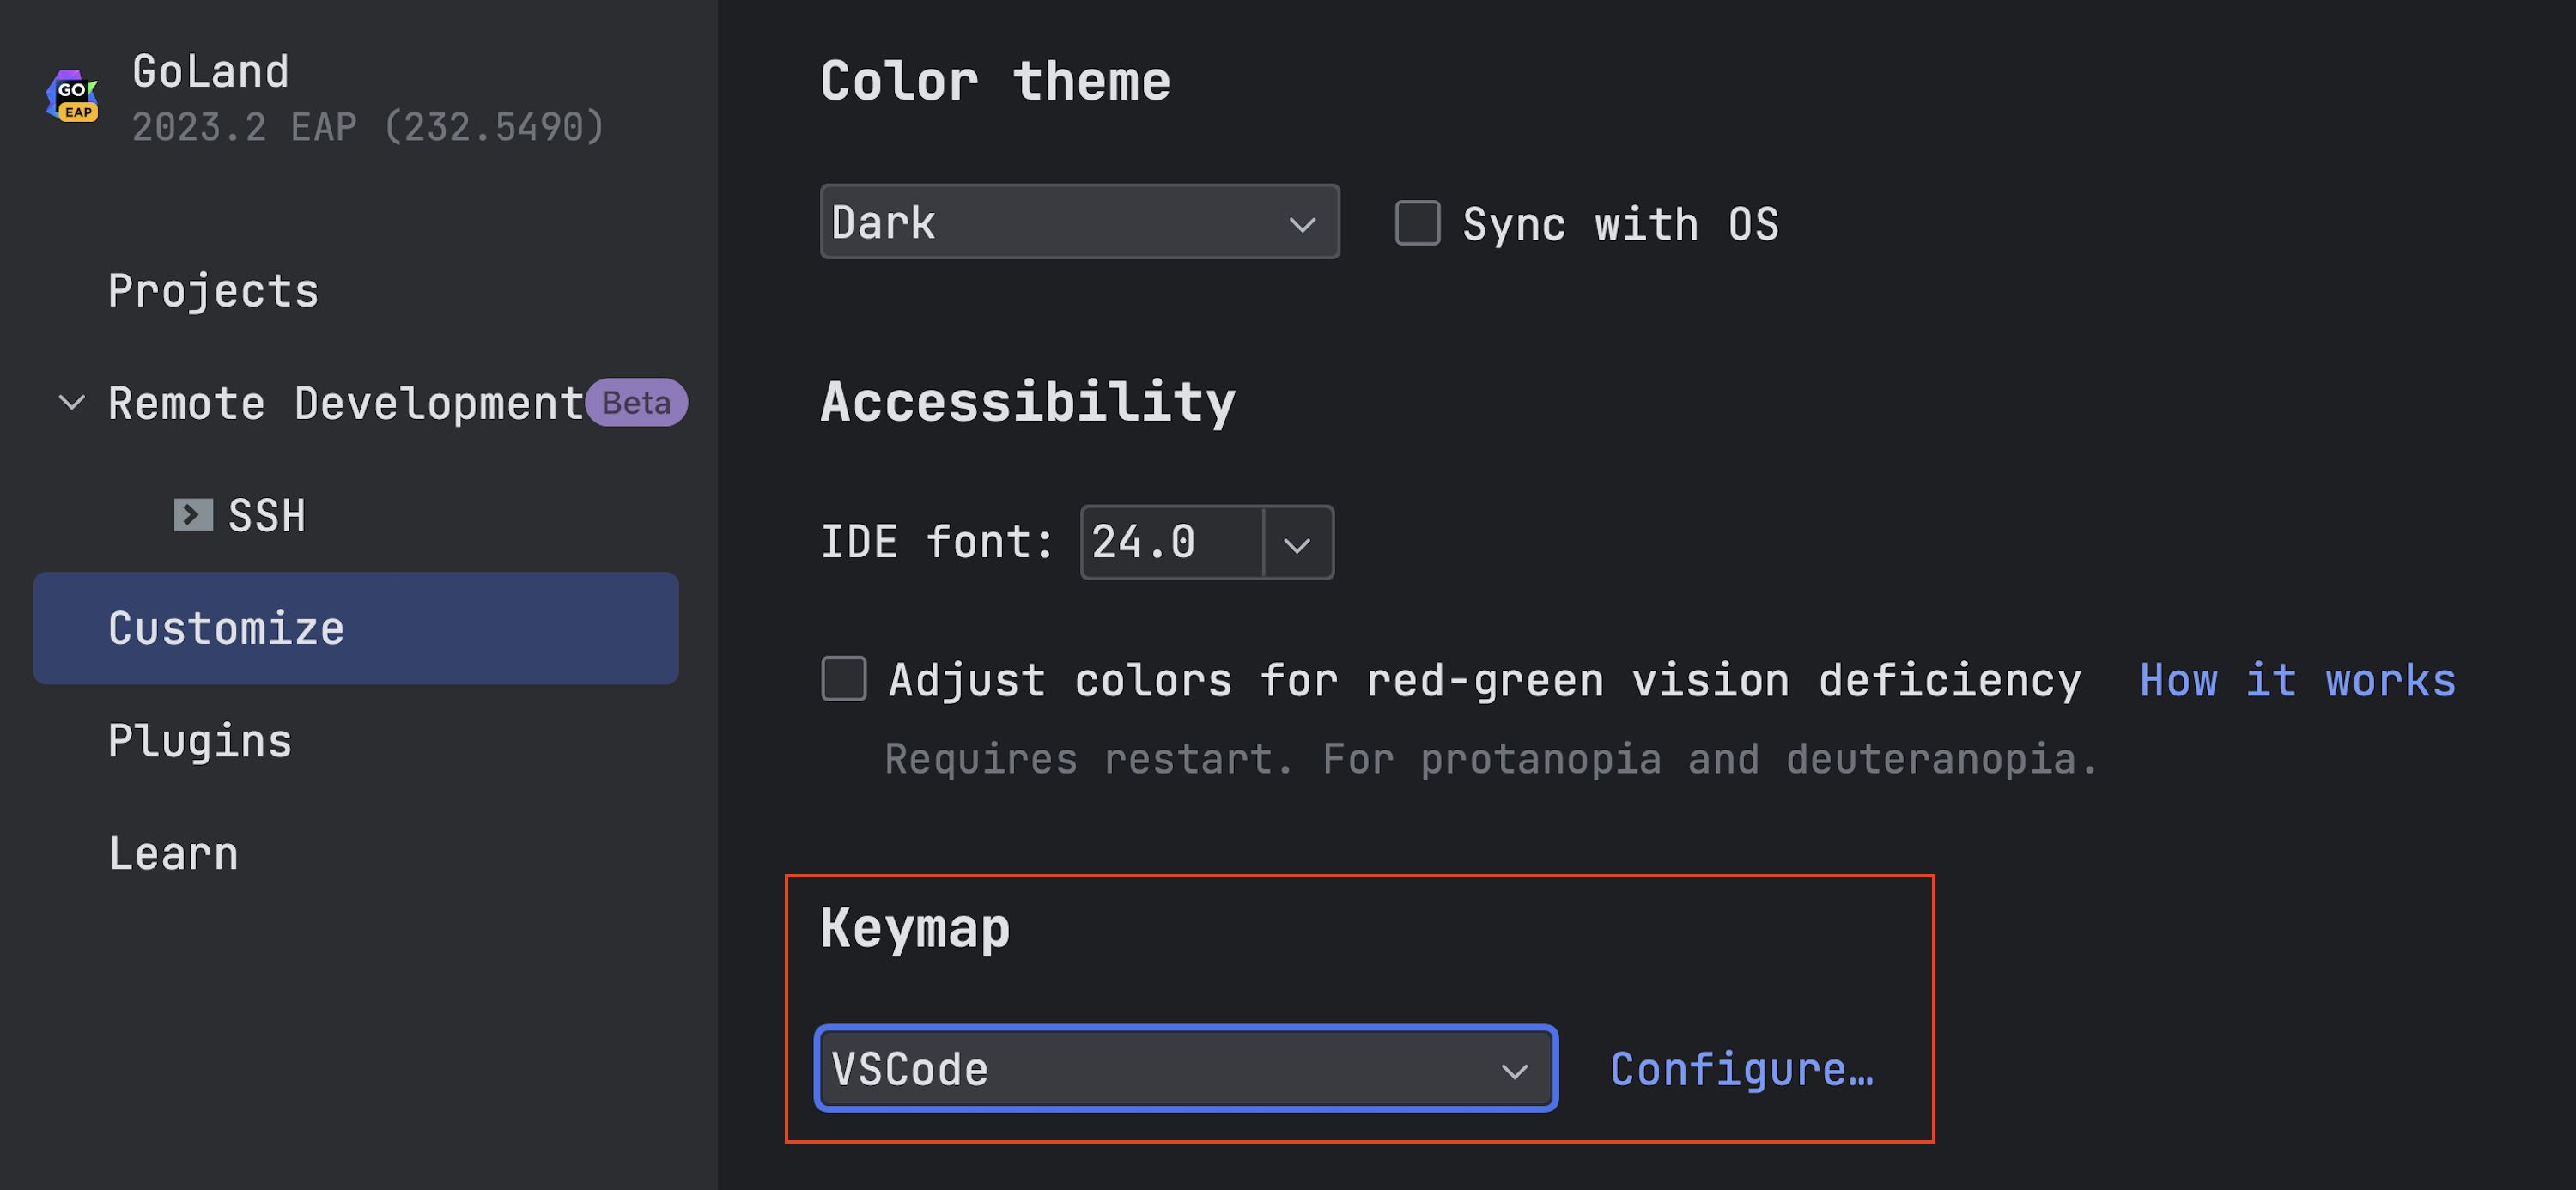 Selecting the bundled VS Code keymap in the GoLand settings